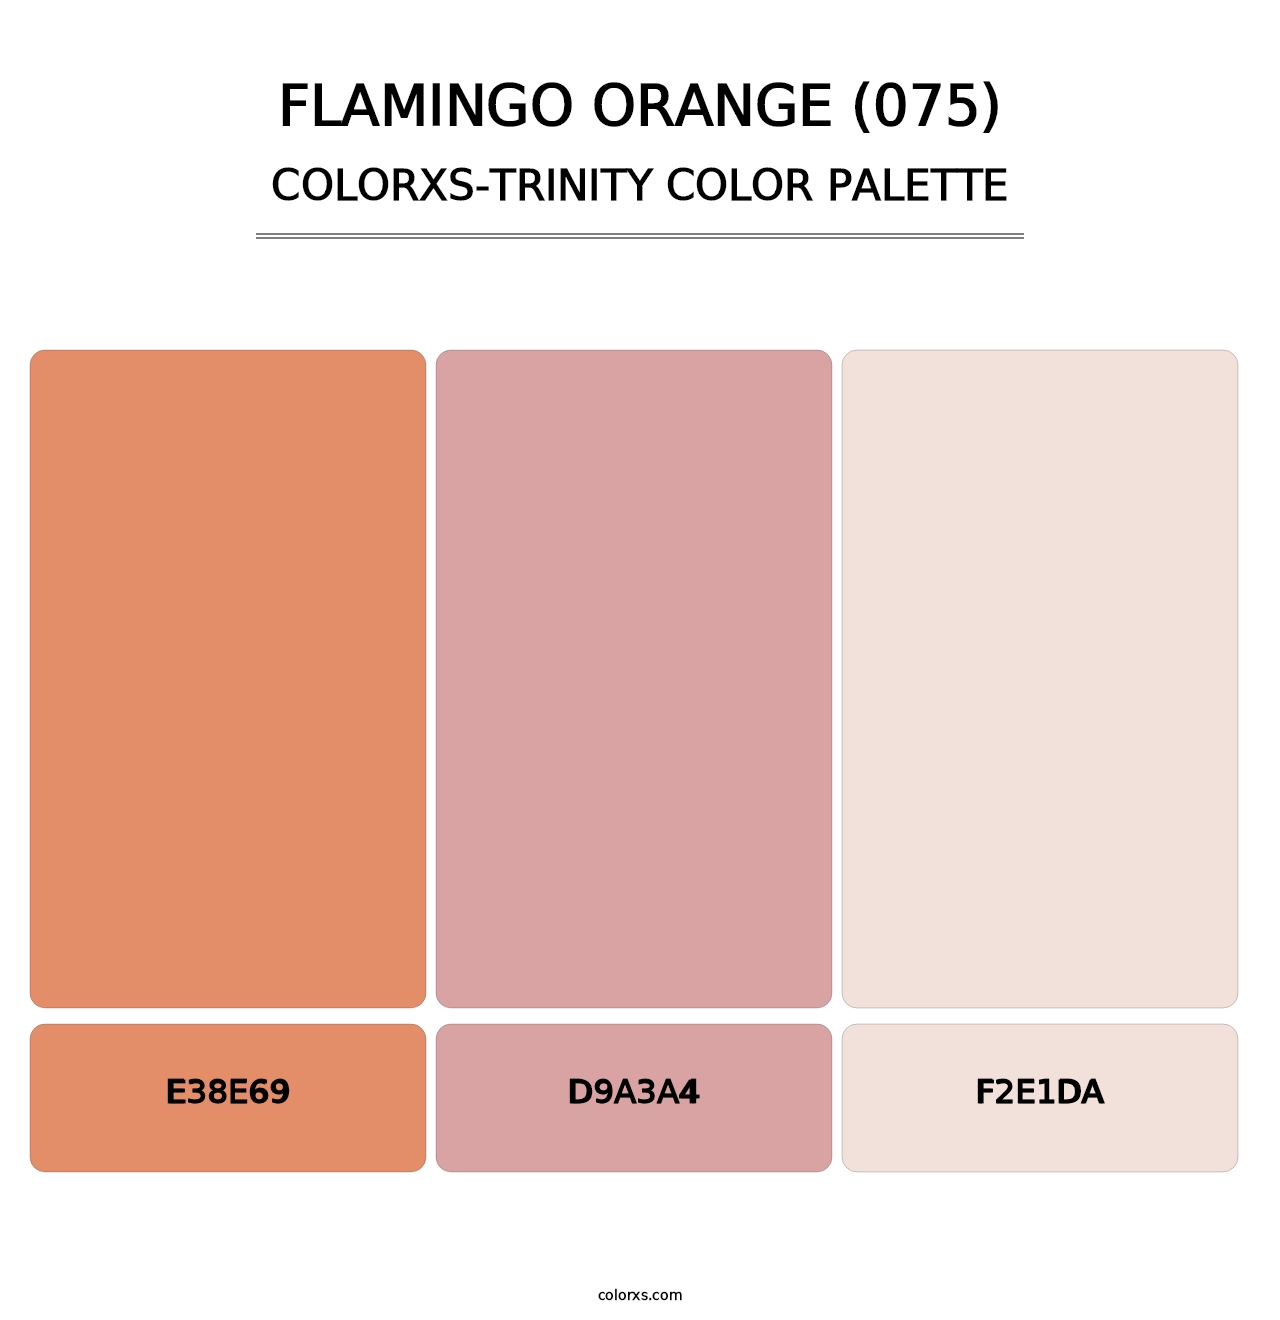 Flamingo Orange (075) - Colorxs Trinity Palette